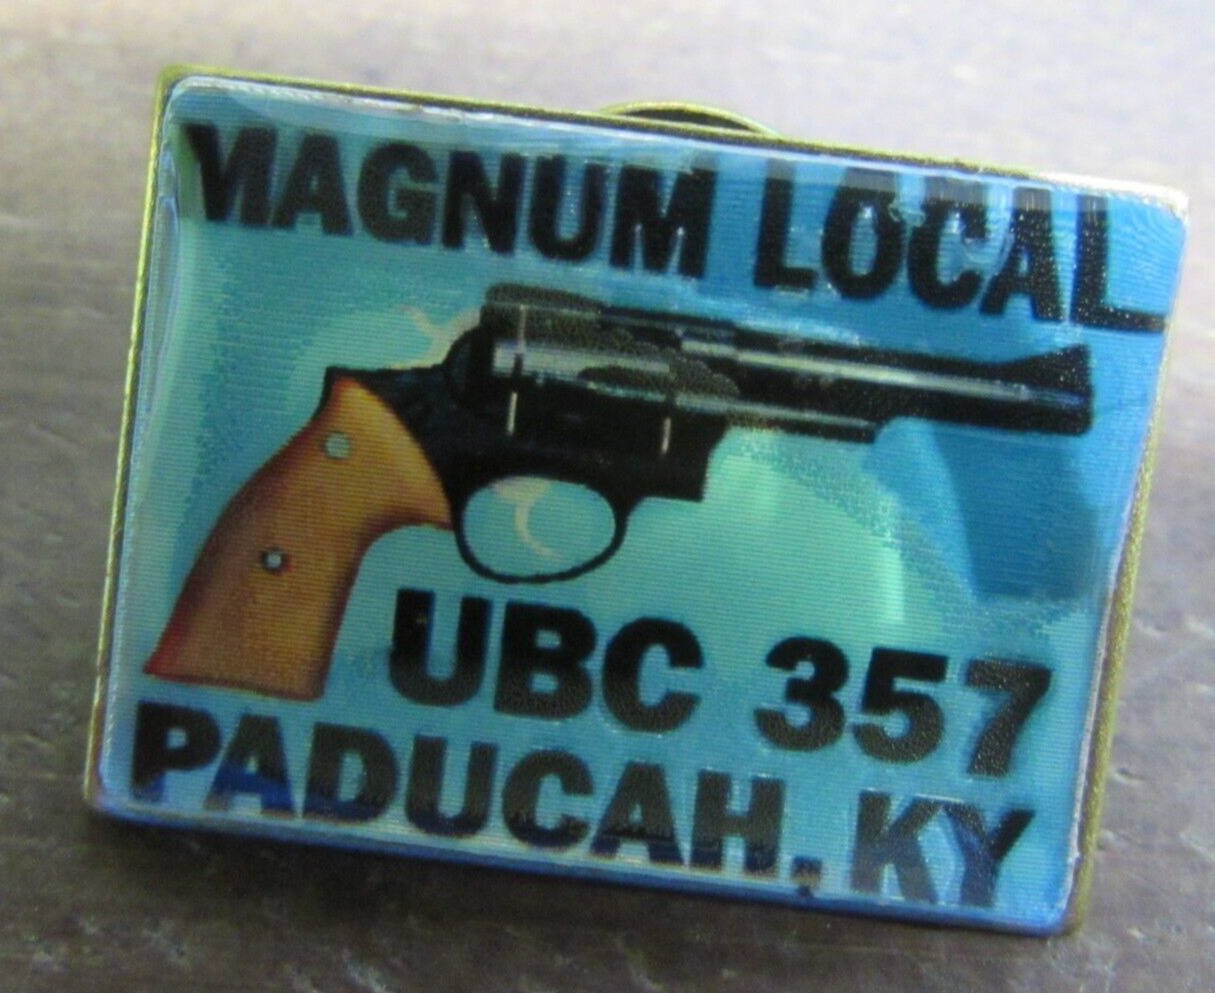 UBC Union United Brotherhood of Carpenters Magnum Local 357 PADUCAH KY Pin